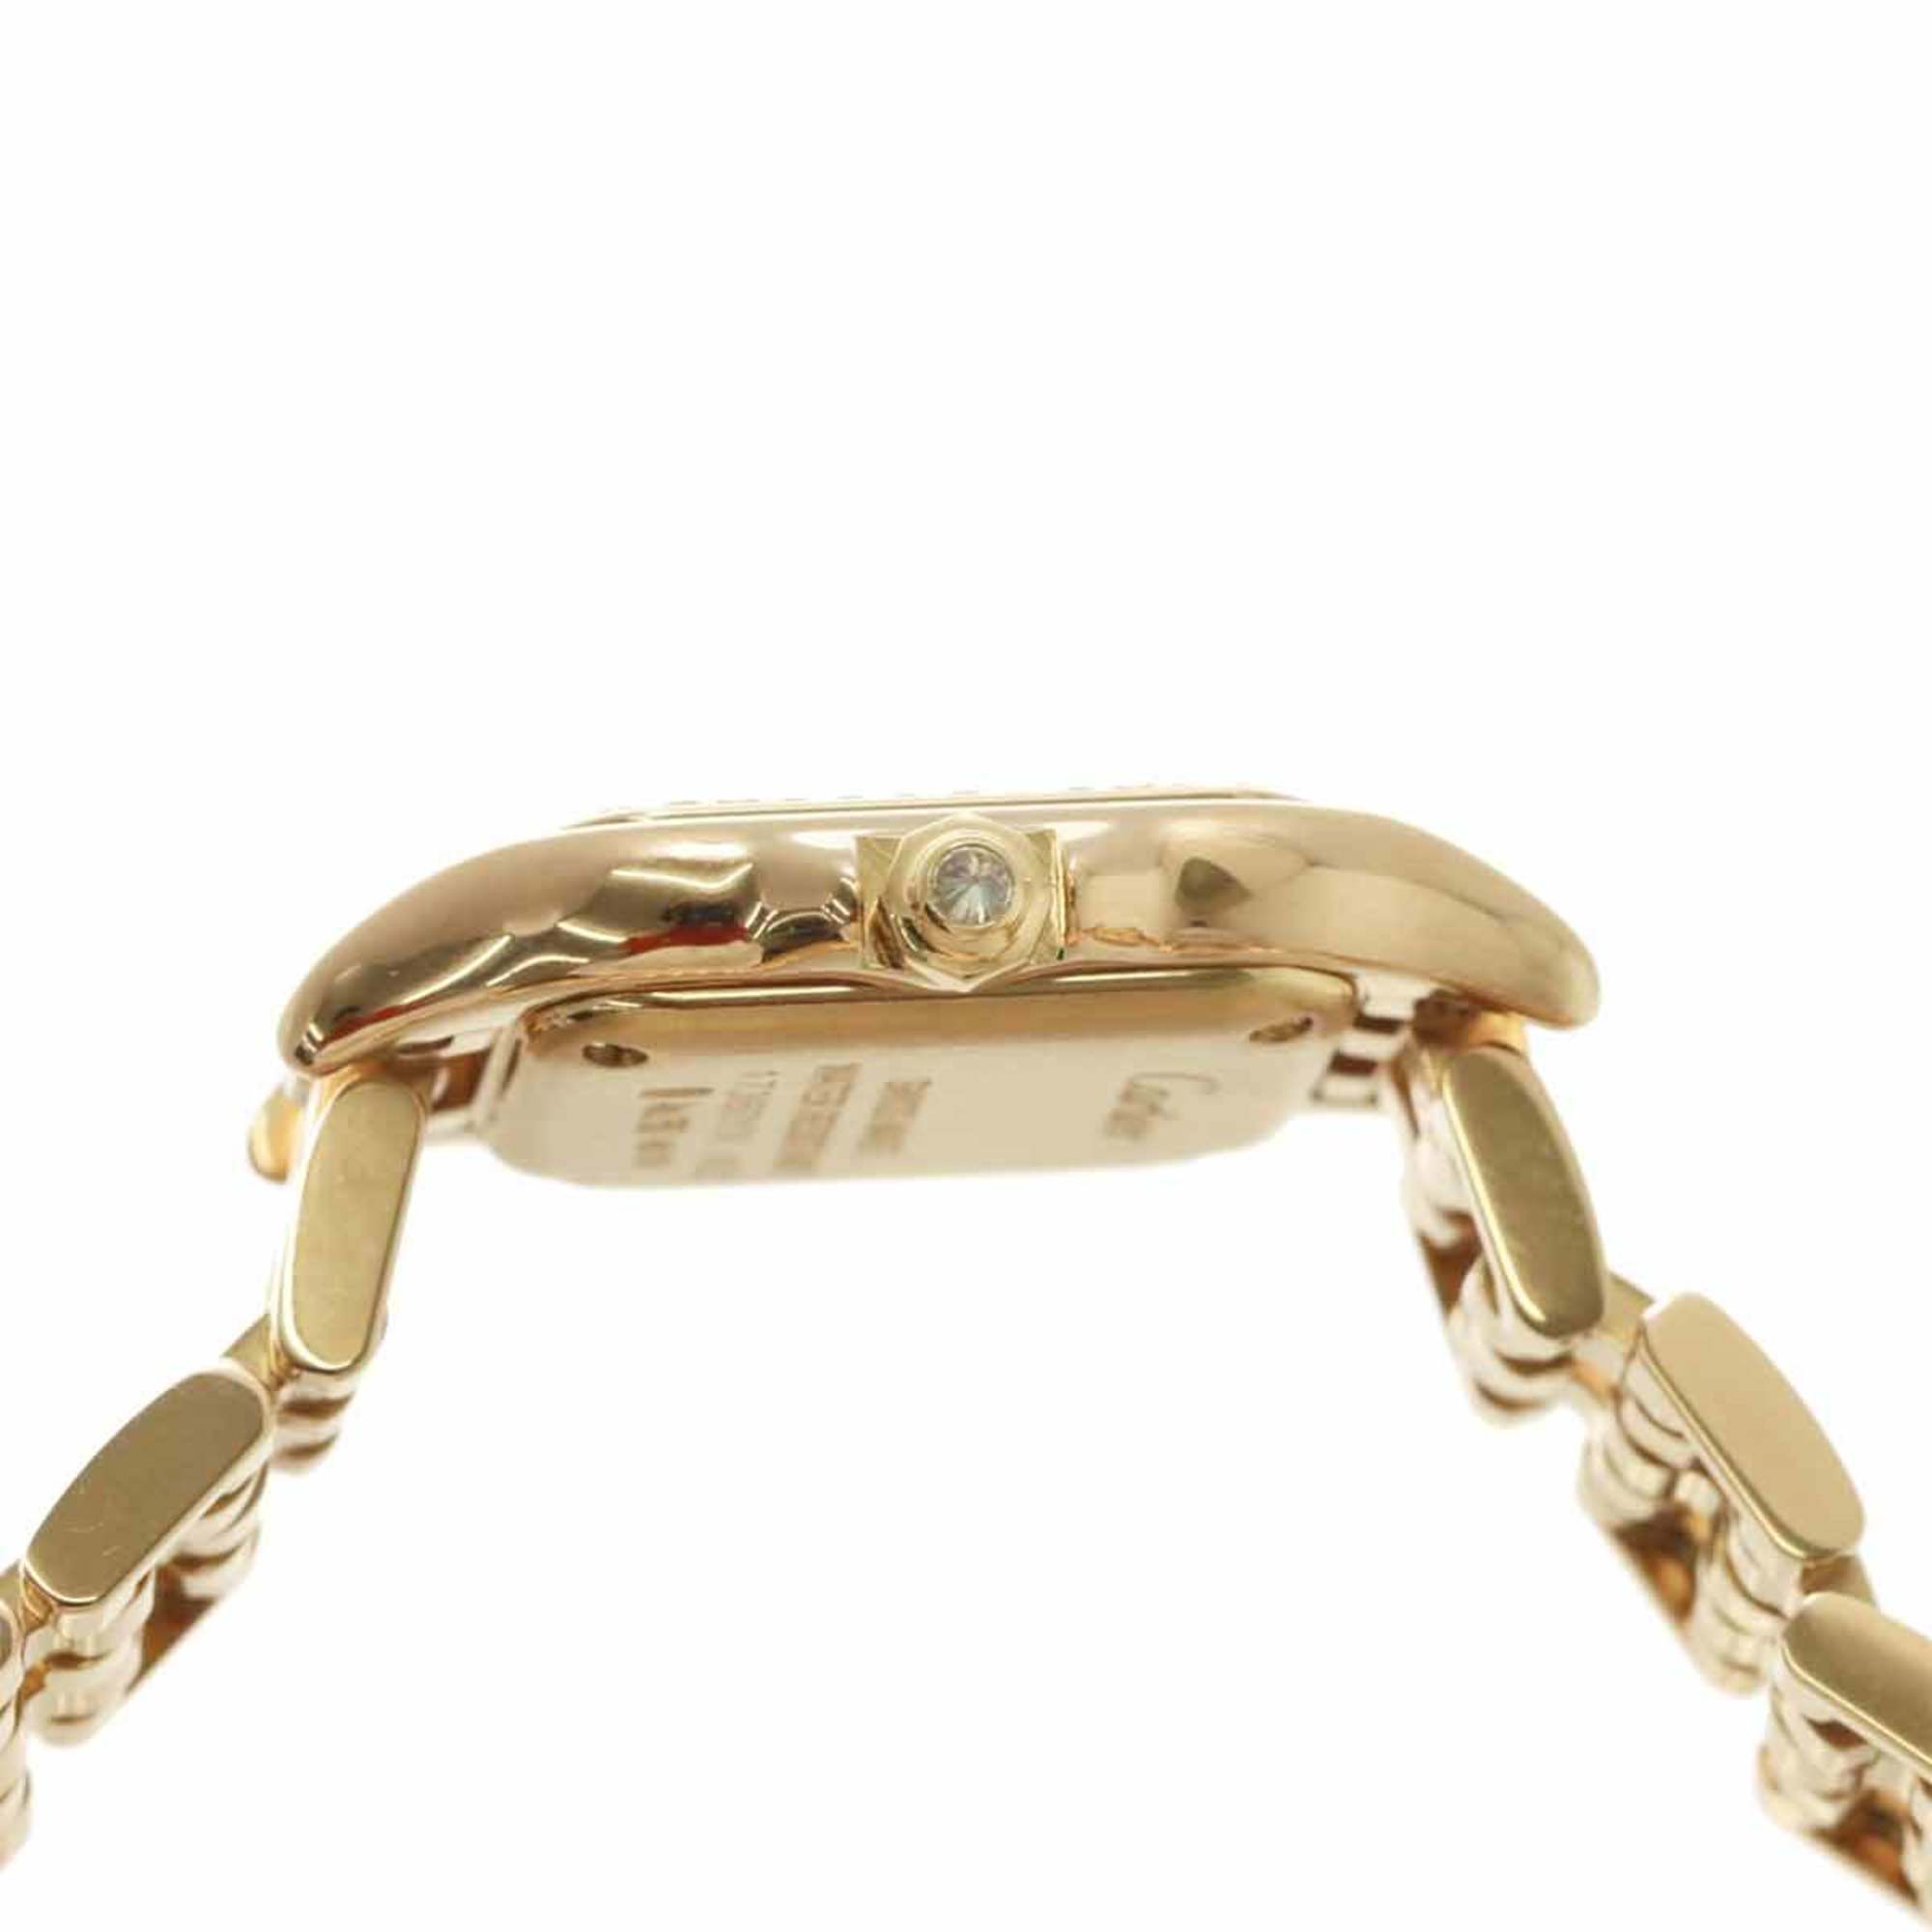 Cartier Panthere de SM WJPN0014 Ladies' Watch Diamond Bezel Silver Dial K18PG Pink Gold Quartz